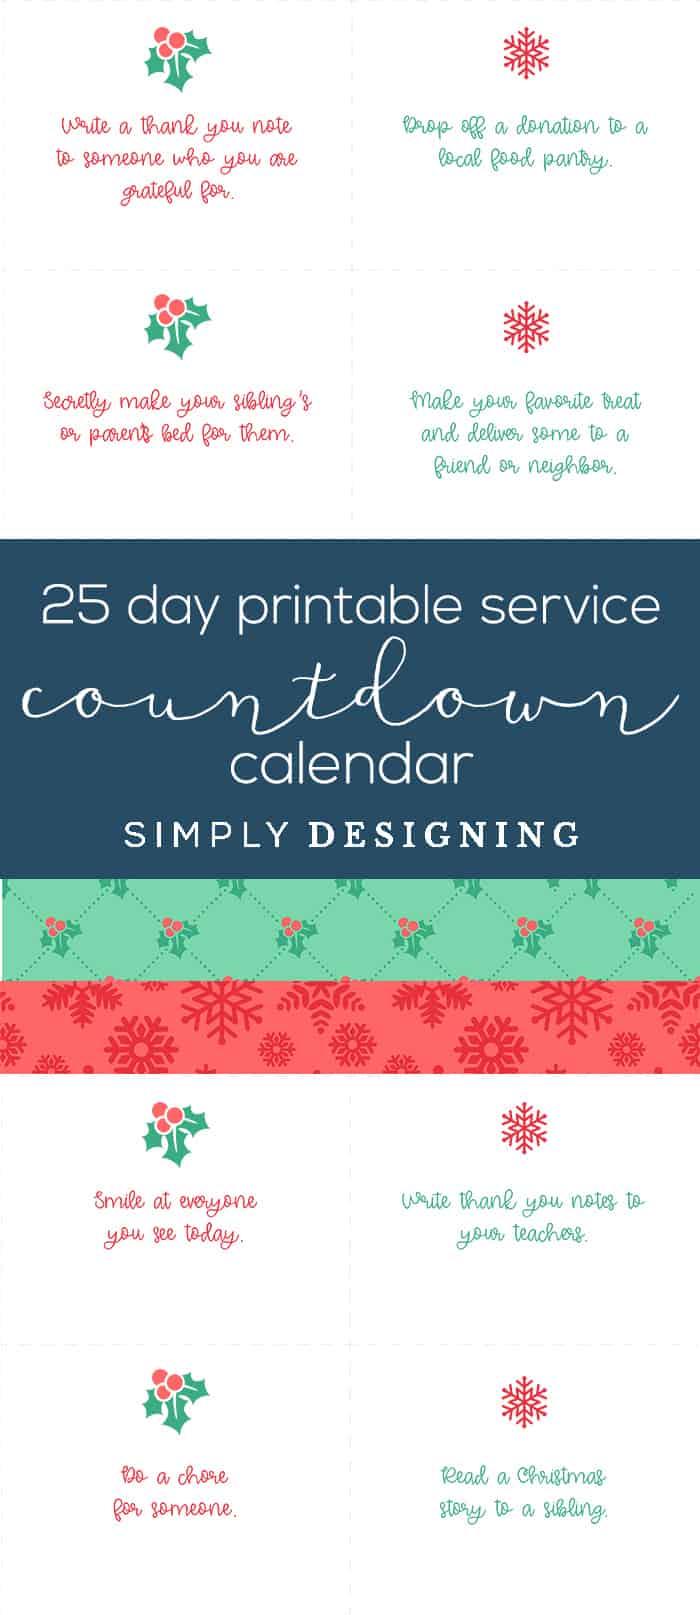 25 Day Free Printable Christmas Countdown Calendar - service countdown calendar - #ad #bhghowiholiday #bhglivebetter #bhgatwalmart @BHGLiveBetter